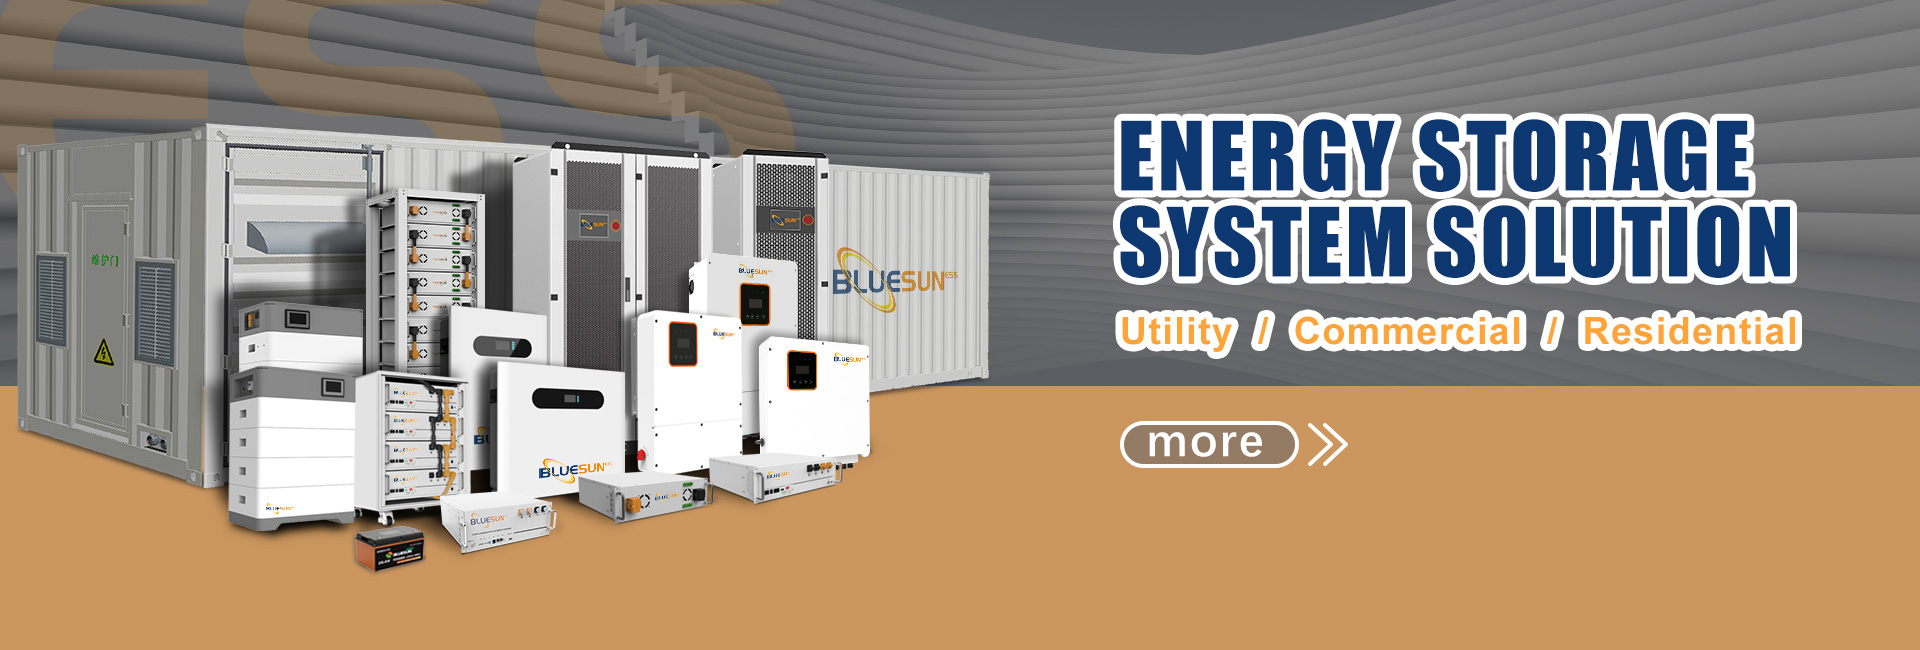 Bluesun Energy Storage System Solution